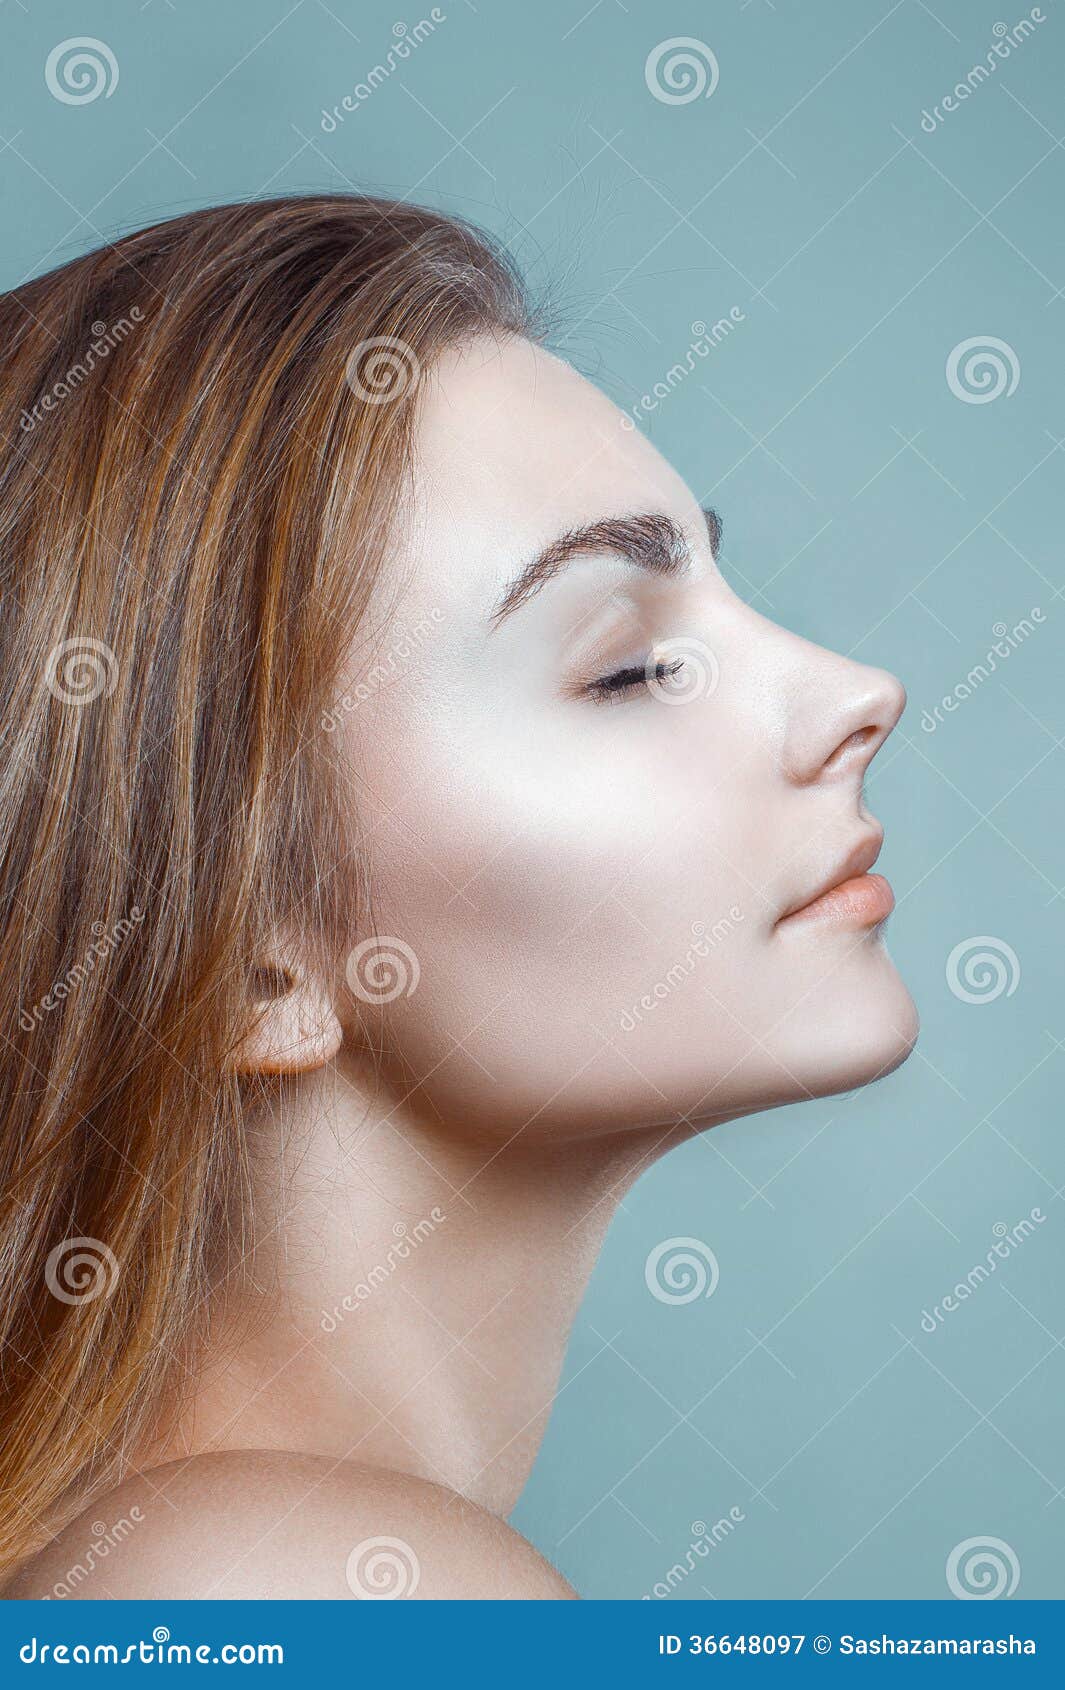 Beautiful Woman Glamour Clean Skin Face Portrait Profile Stock Image ...